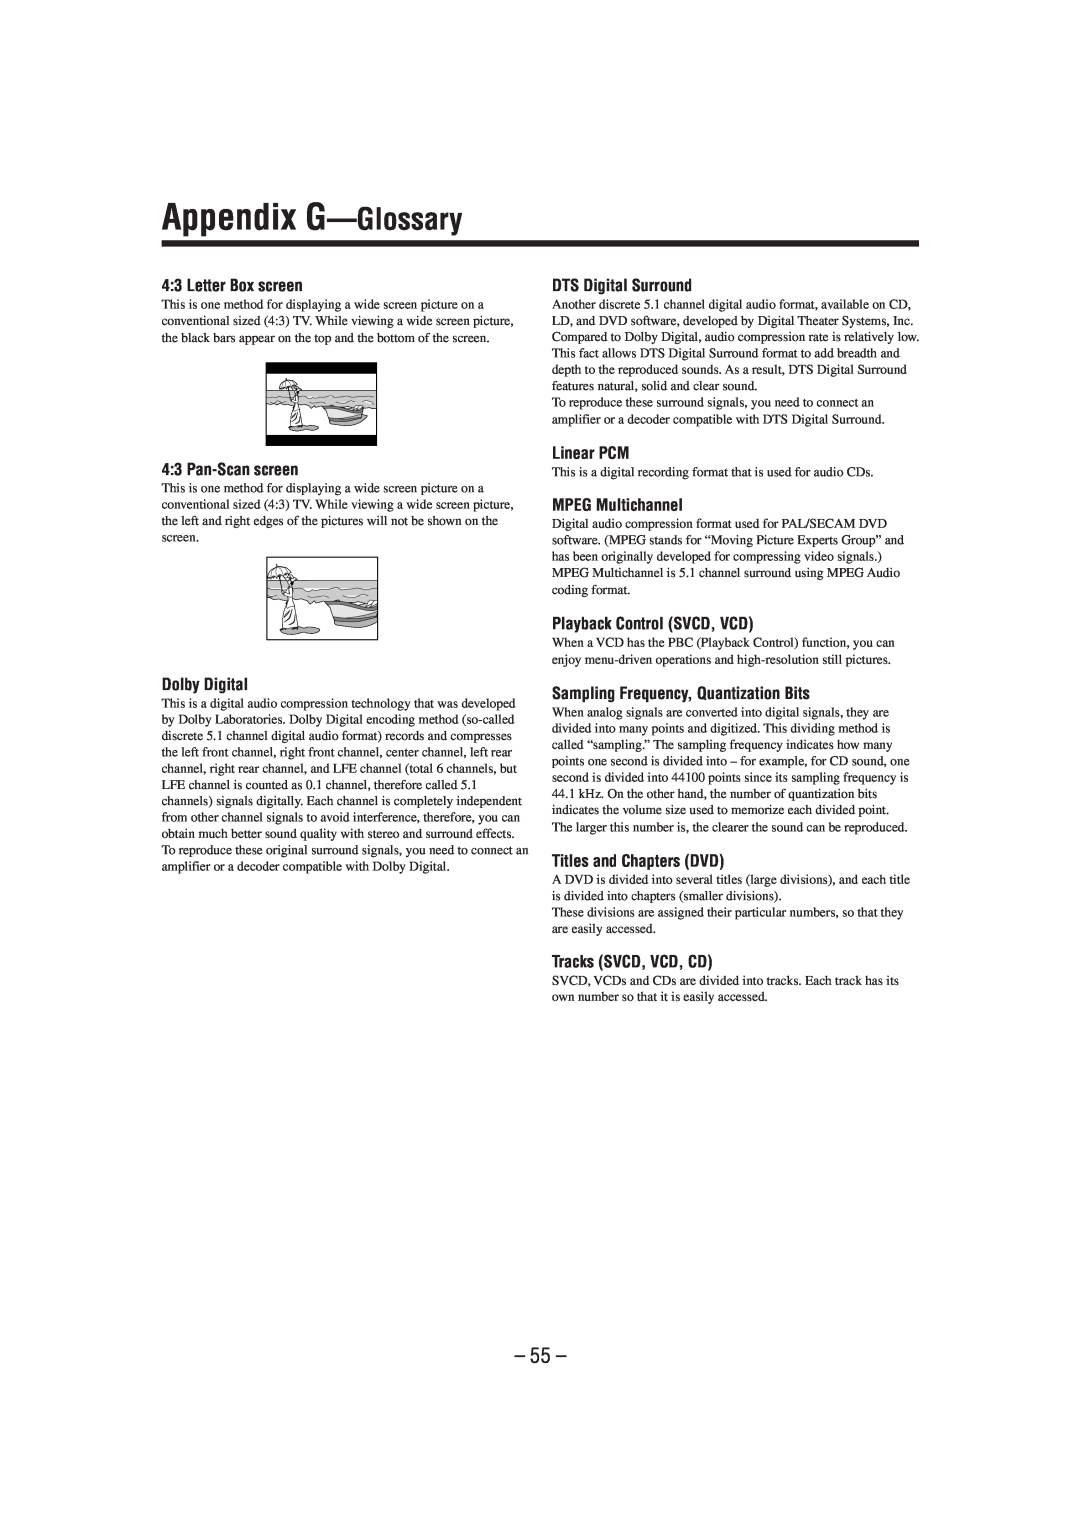 JVC CA-MXDVA9 manual Appendix G-Glossary, 4 3 Letter Box screen, DTS Digital Surround, 4 3 Pan-Scanscreen, Dolby Digital 